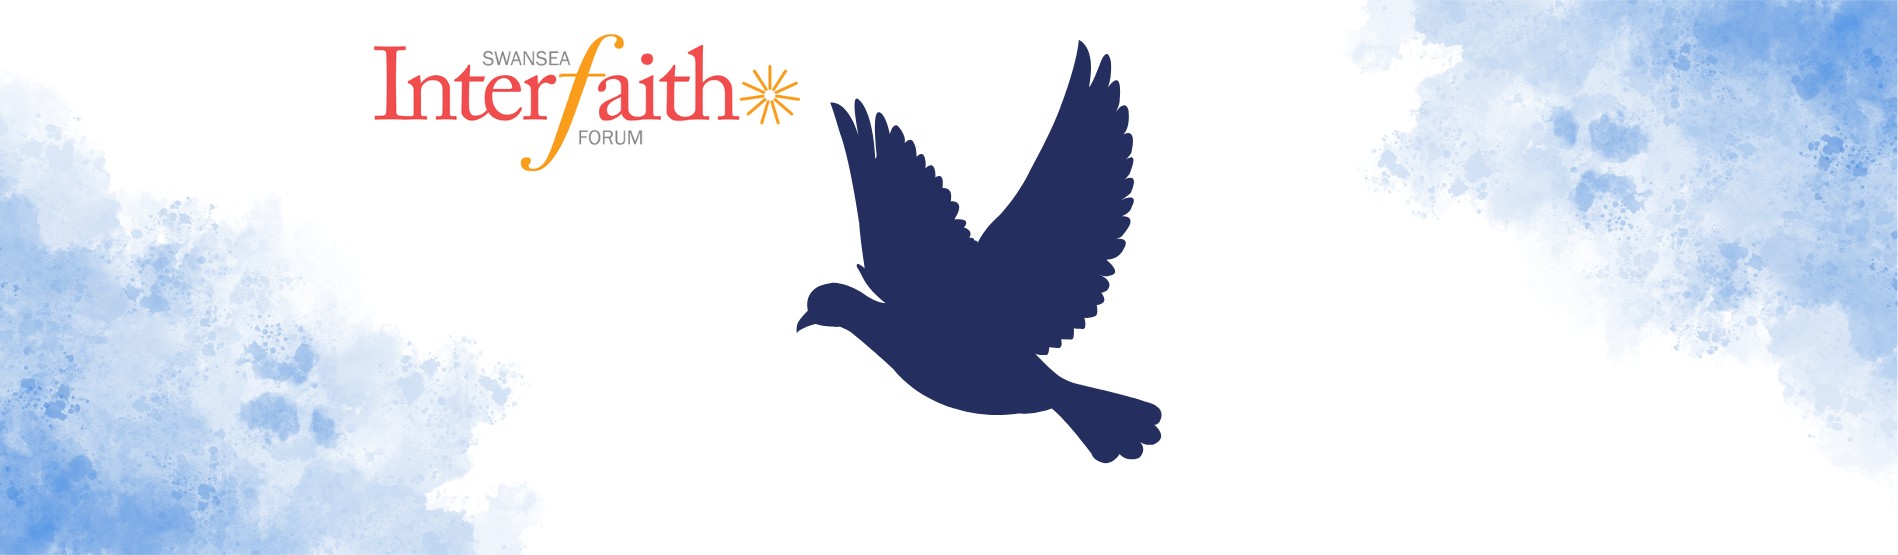 Icon for interfaith - a dove and the swansea interfaith logo